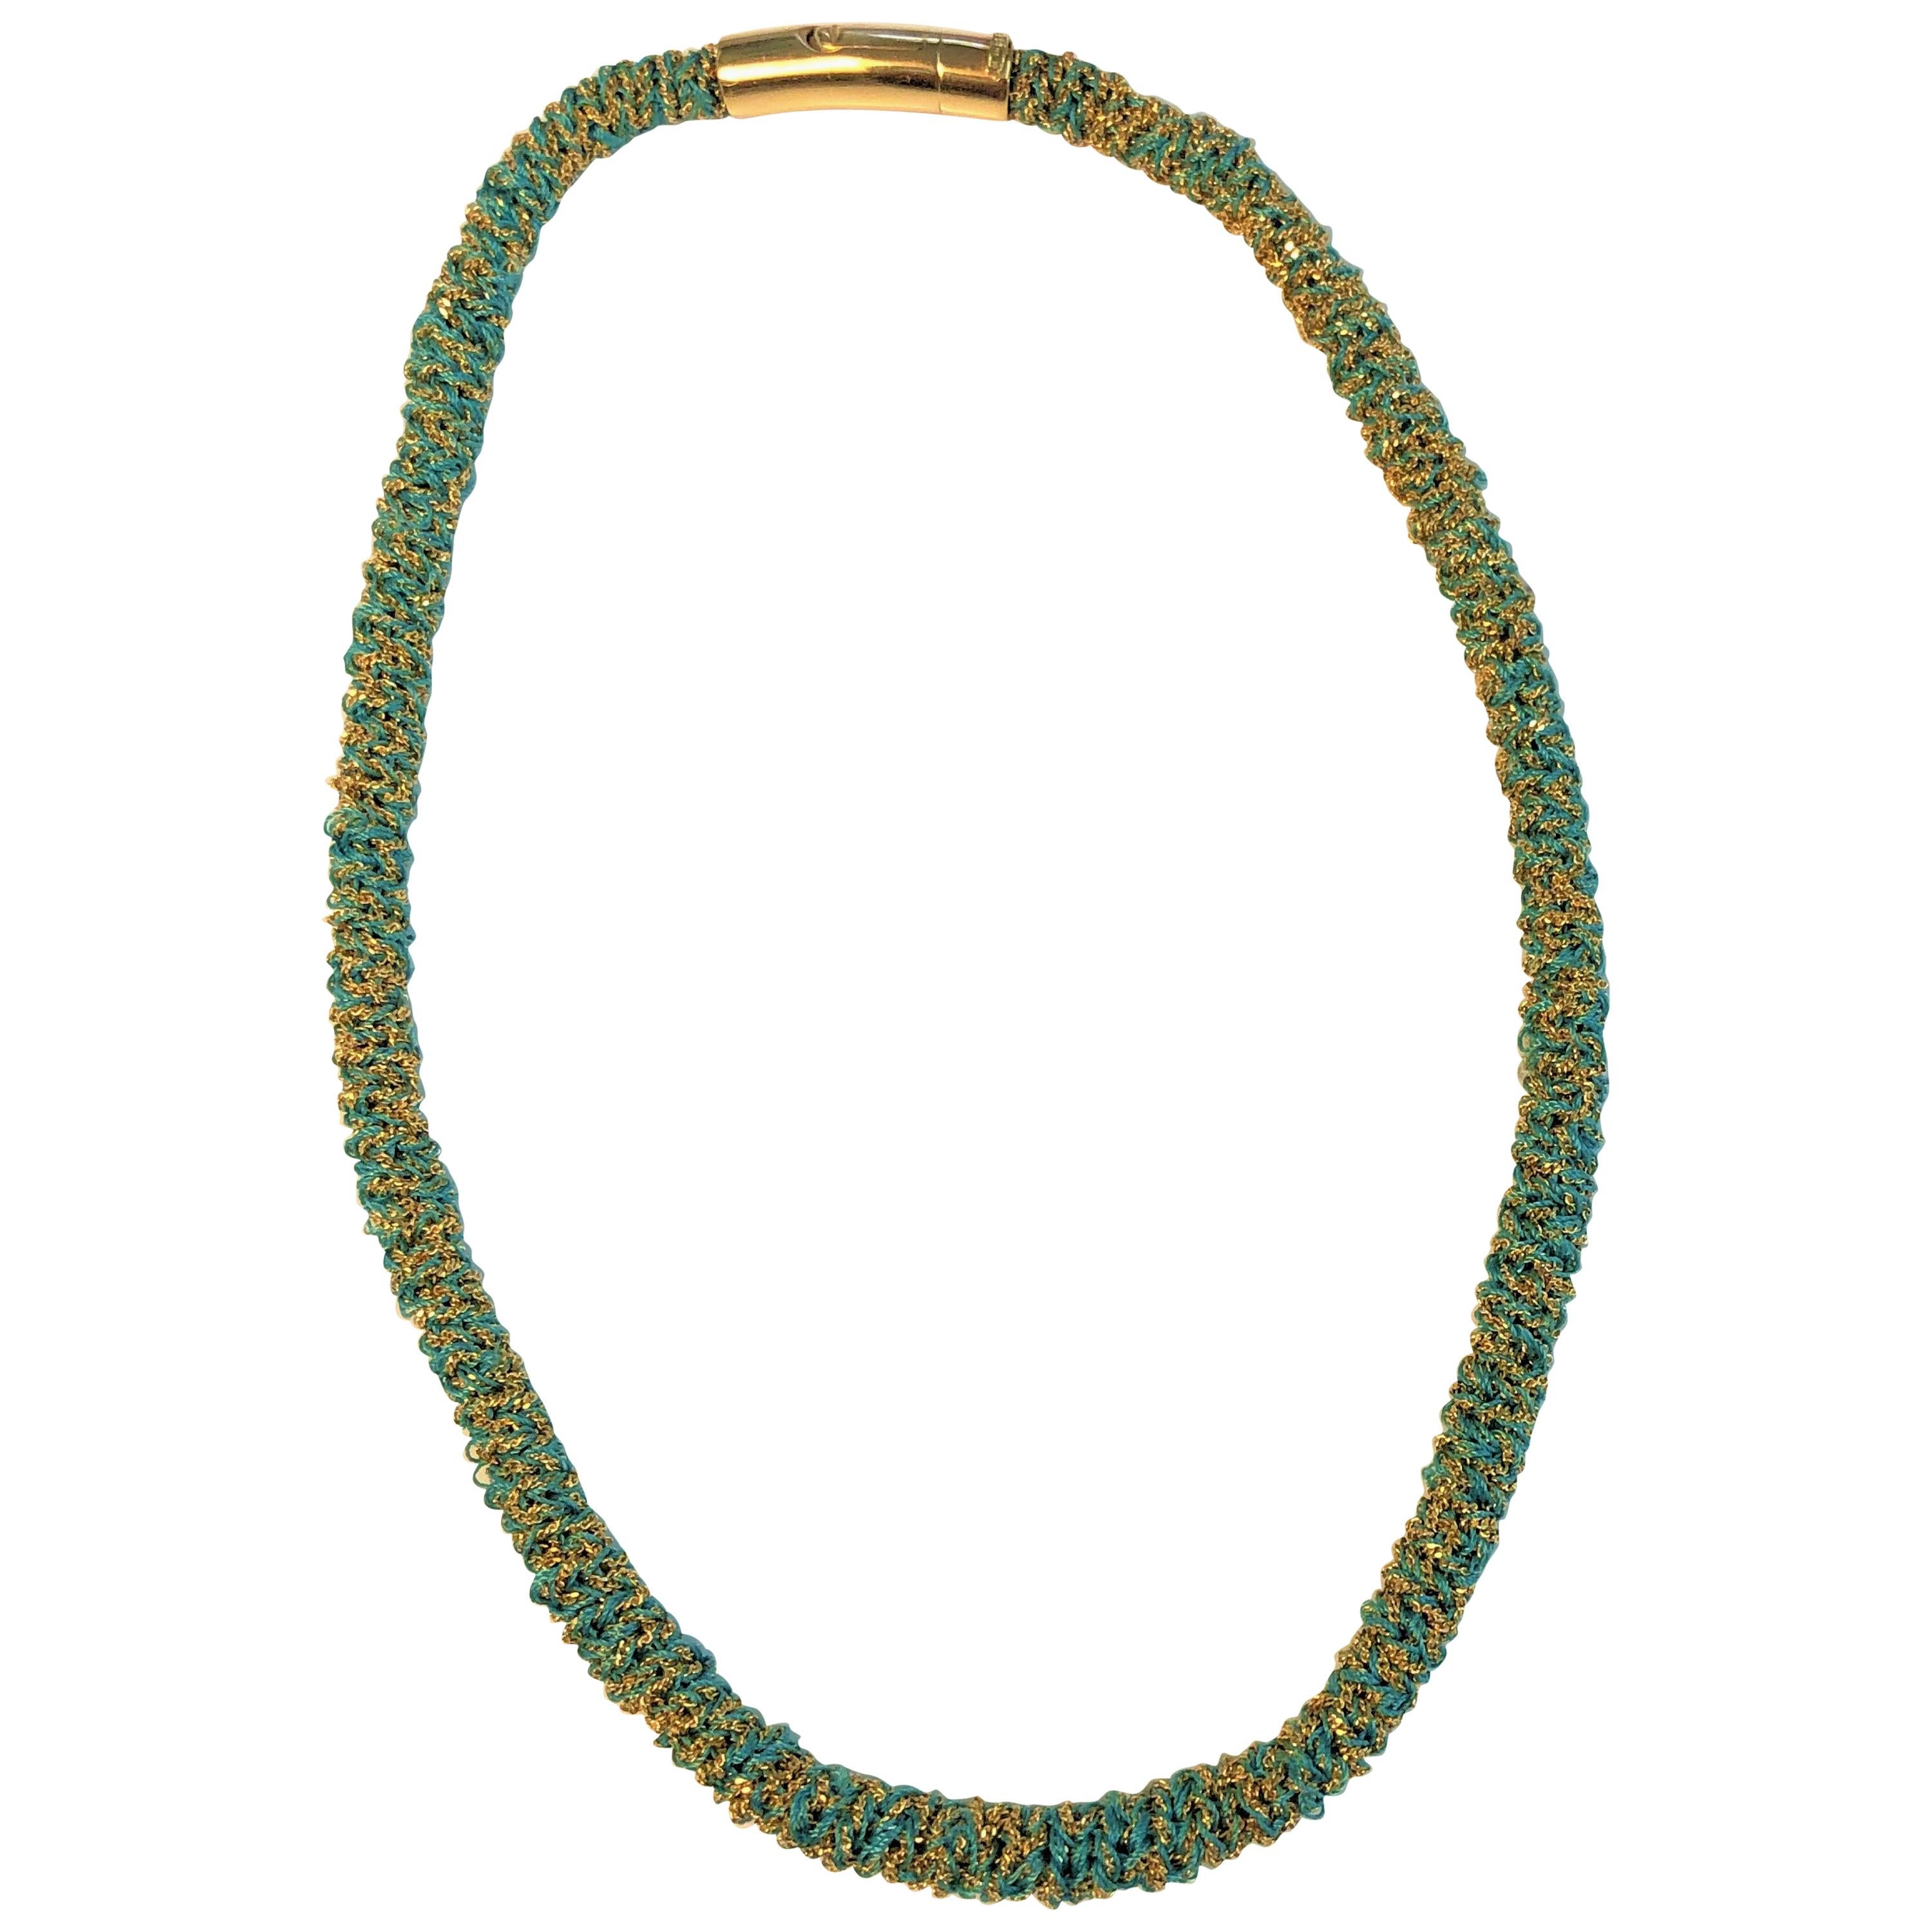 Carolina Bucci 18 Karat Gold and Turquoise Color Woven Necklace or Bracelet For Sale